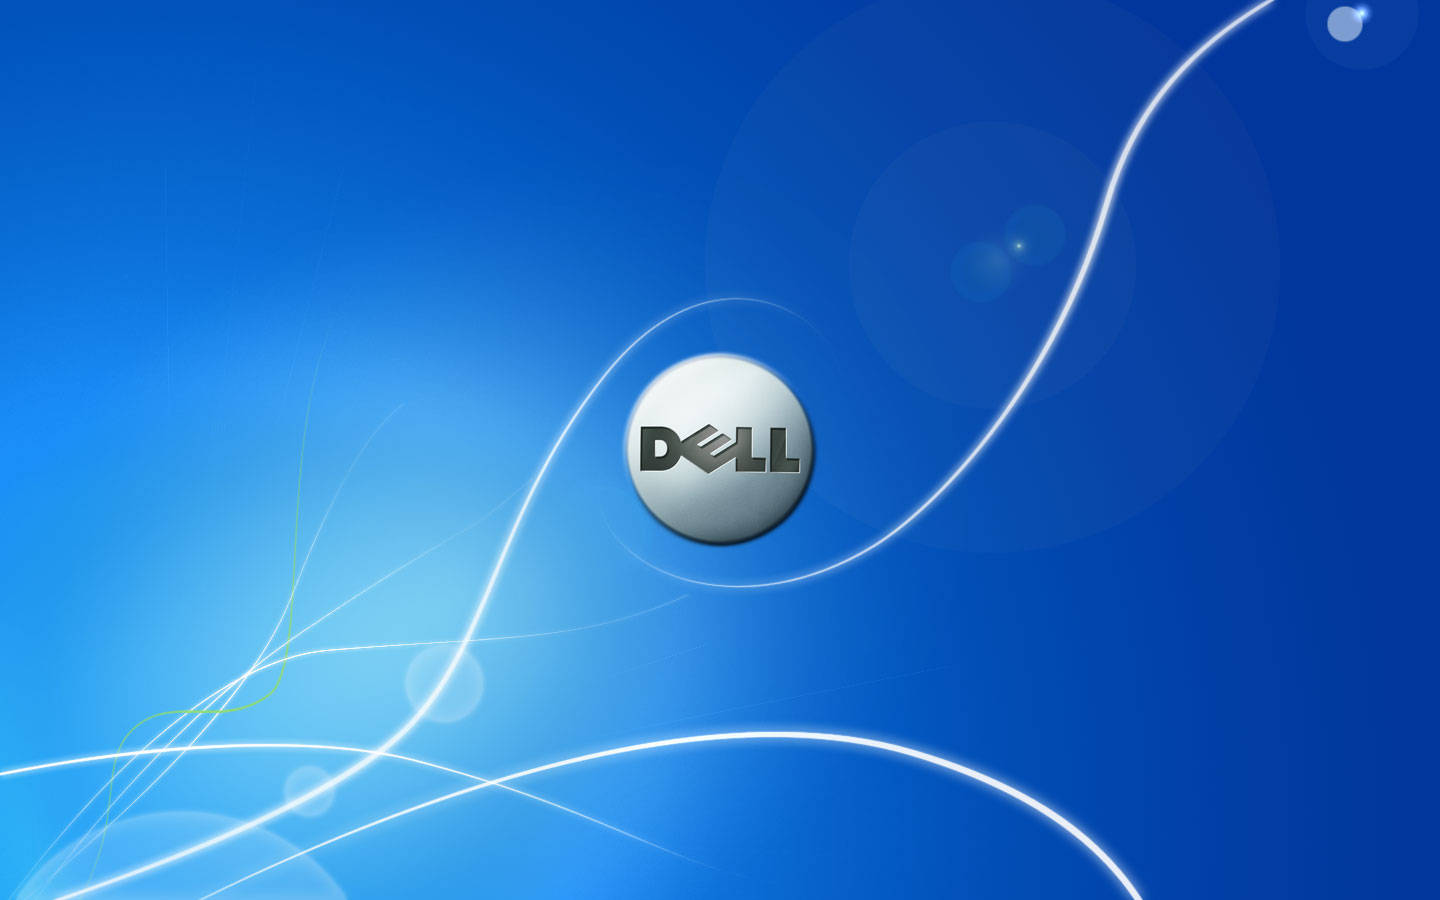 Dell Hd Logo In Bright Blue Background